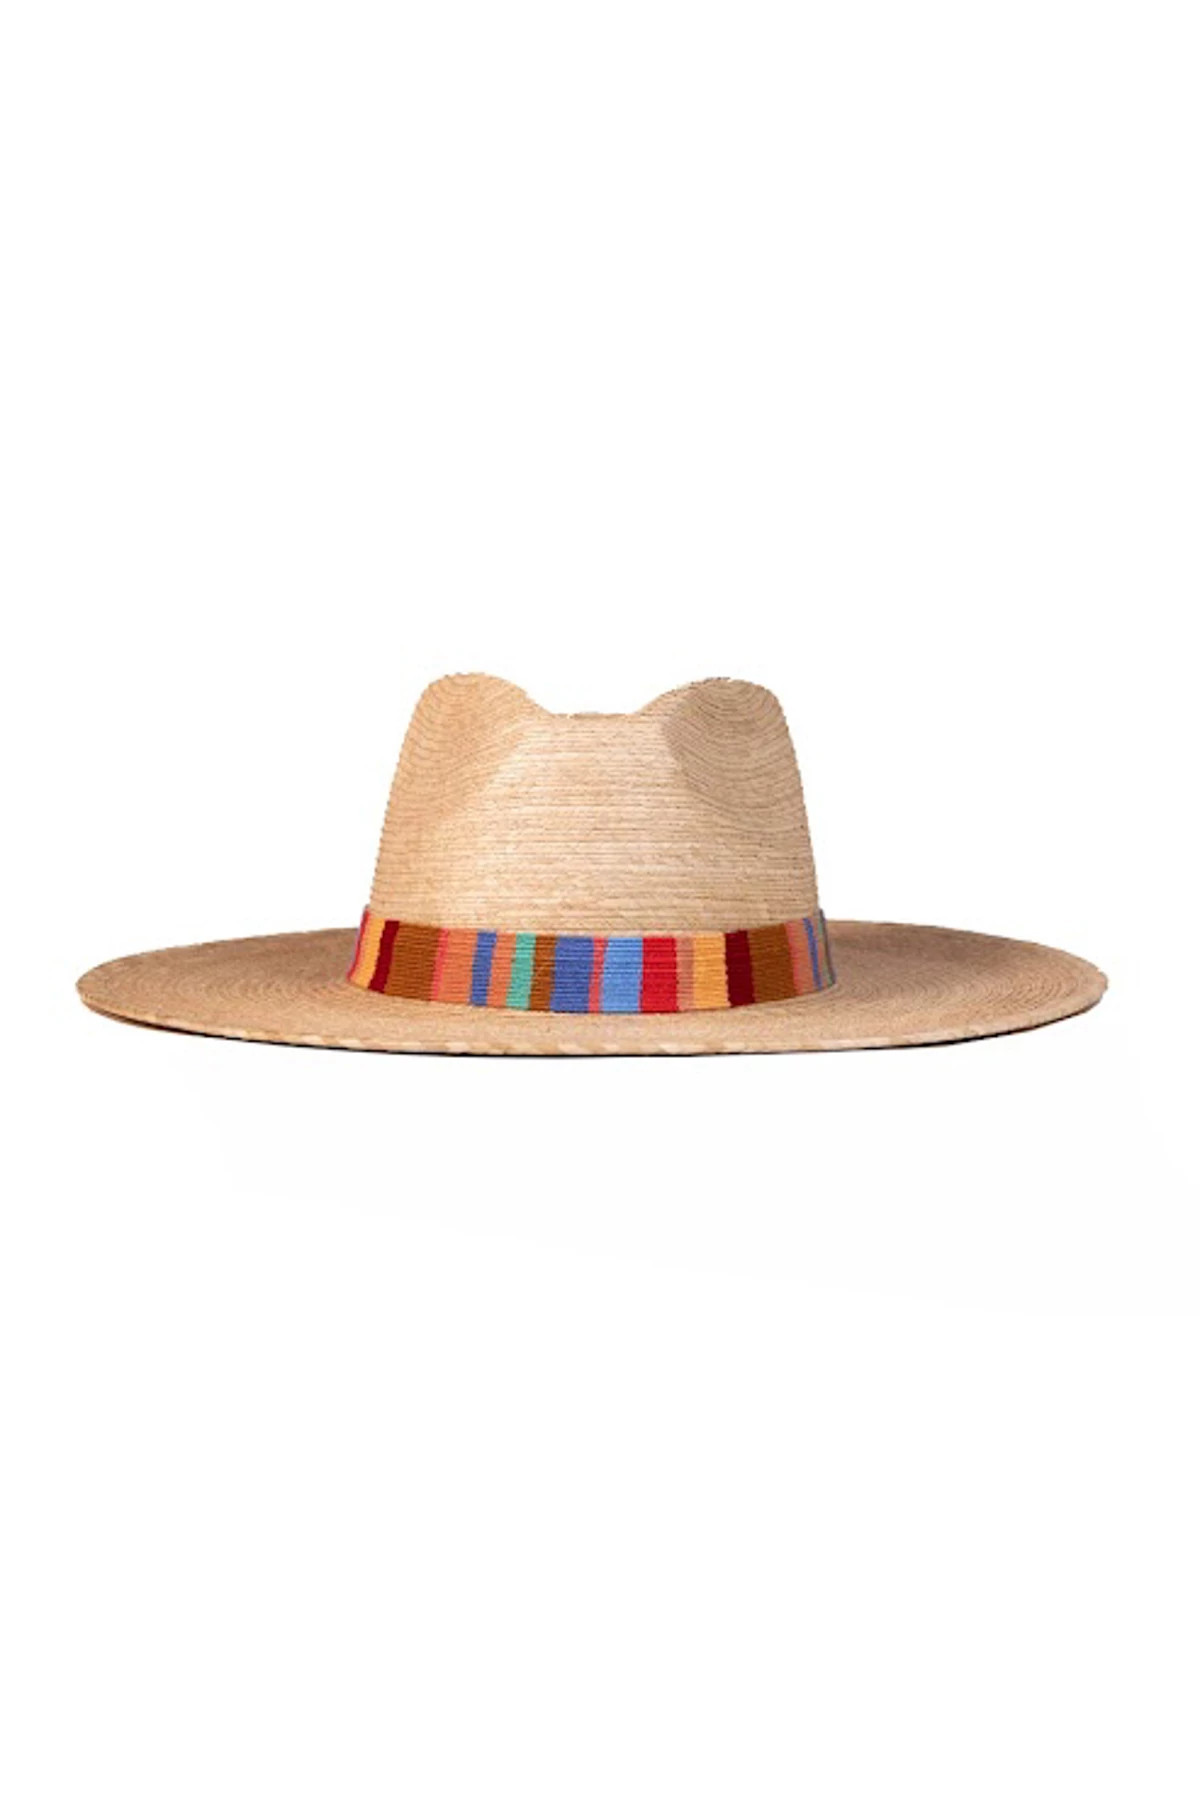 MULTI Guadalupe Palm Panama Hat image number 1